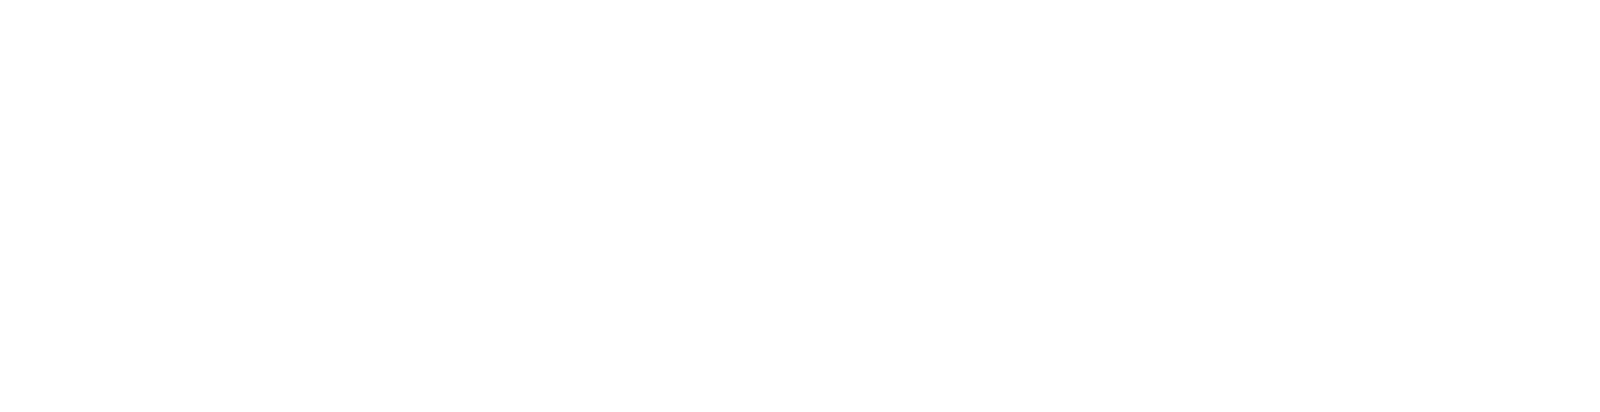 Partner/Affiliate Program - eclincher